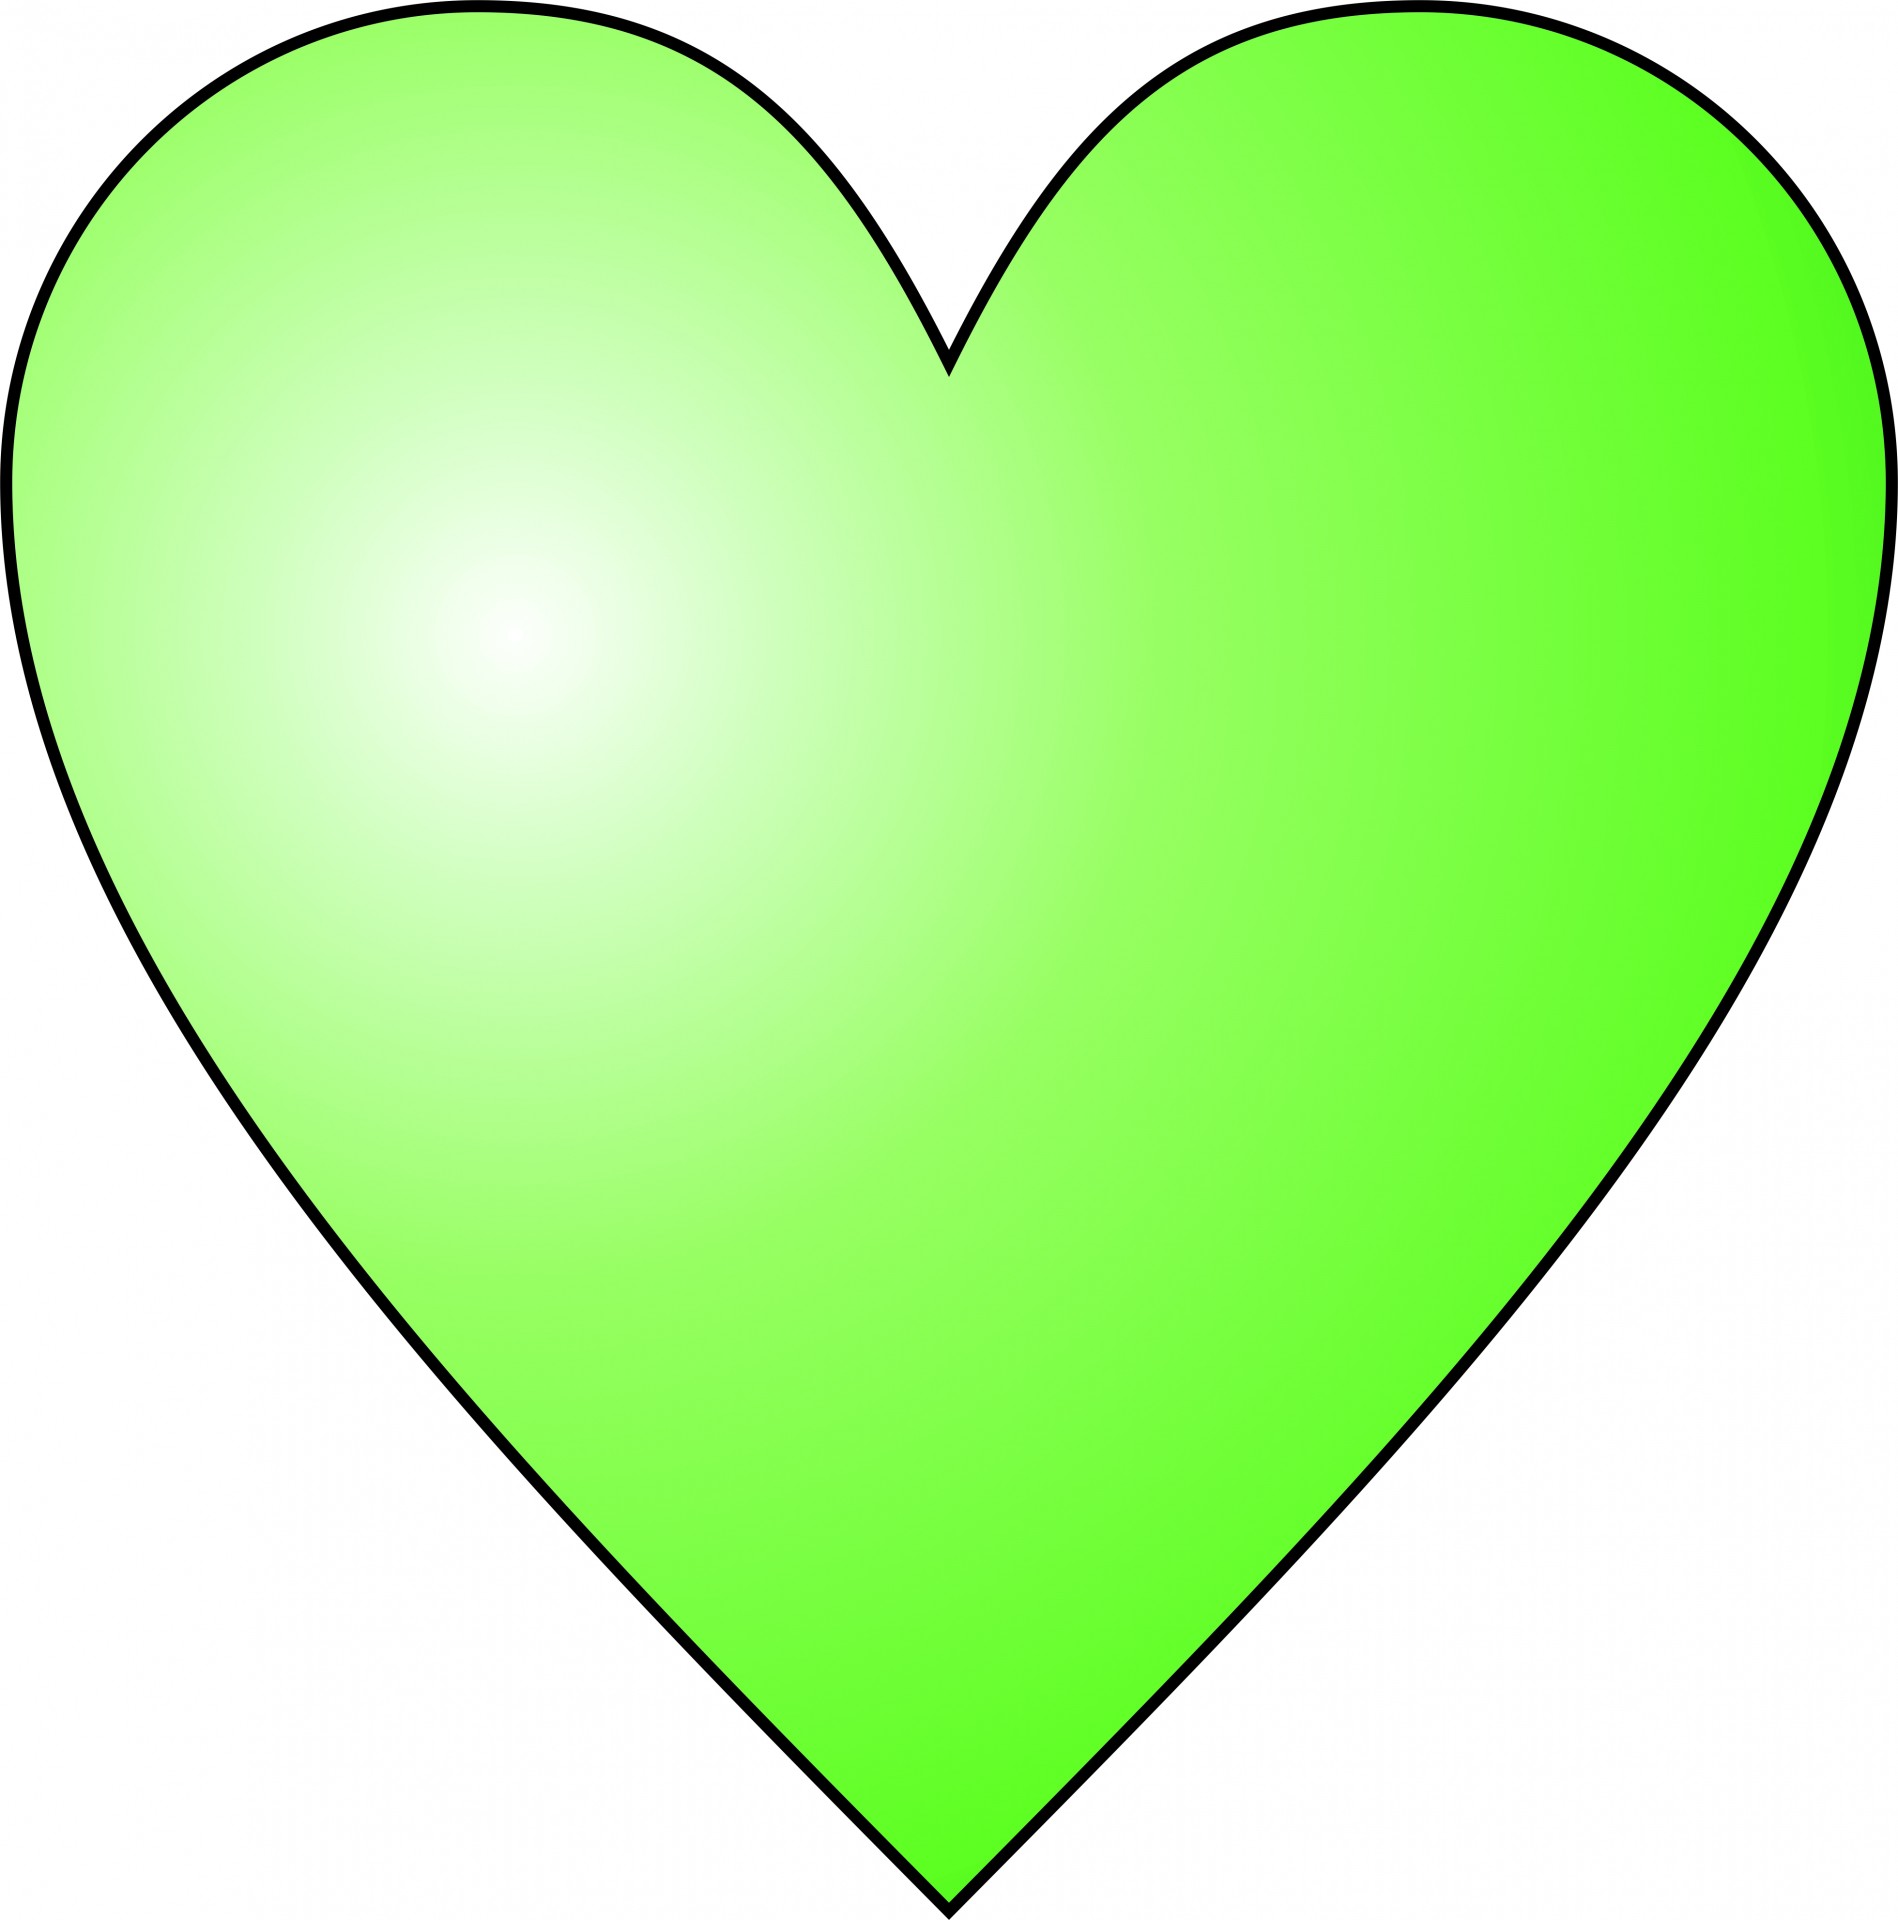 Download Circular Green Heart Free Photo.